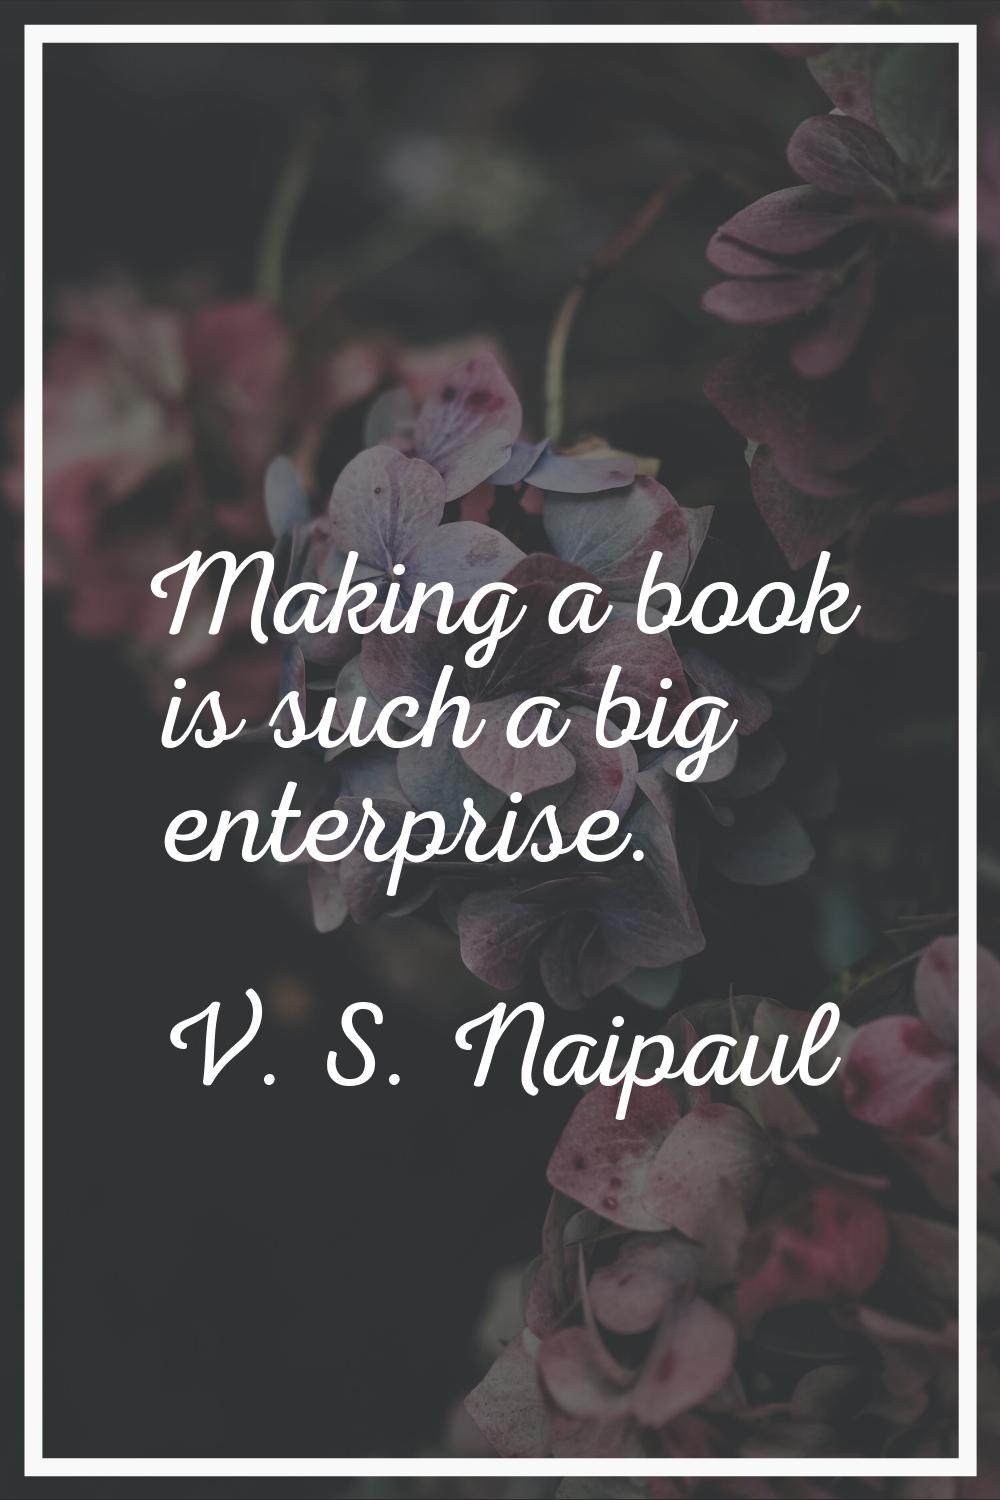 Making a book is such a big enterprise.